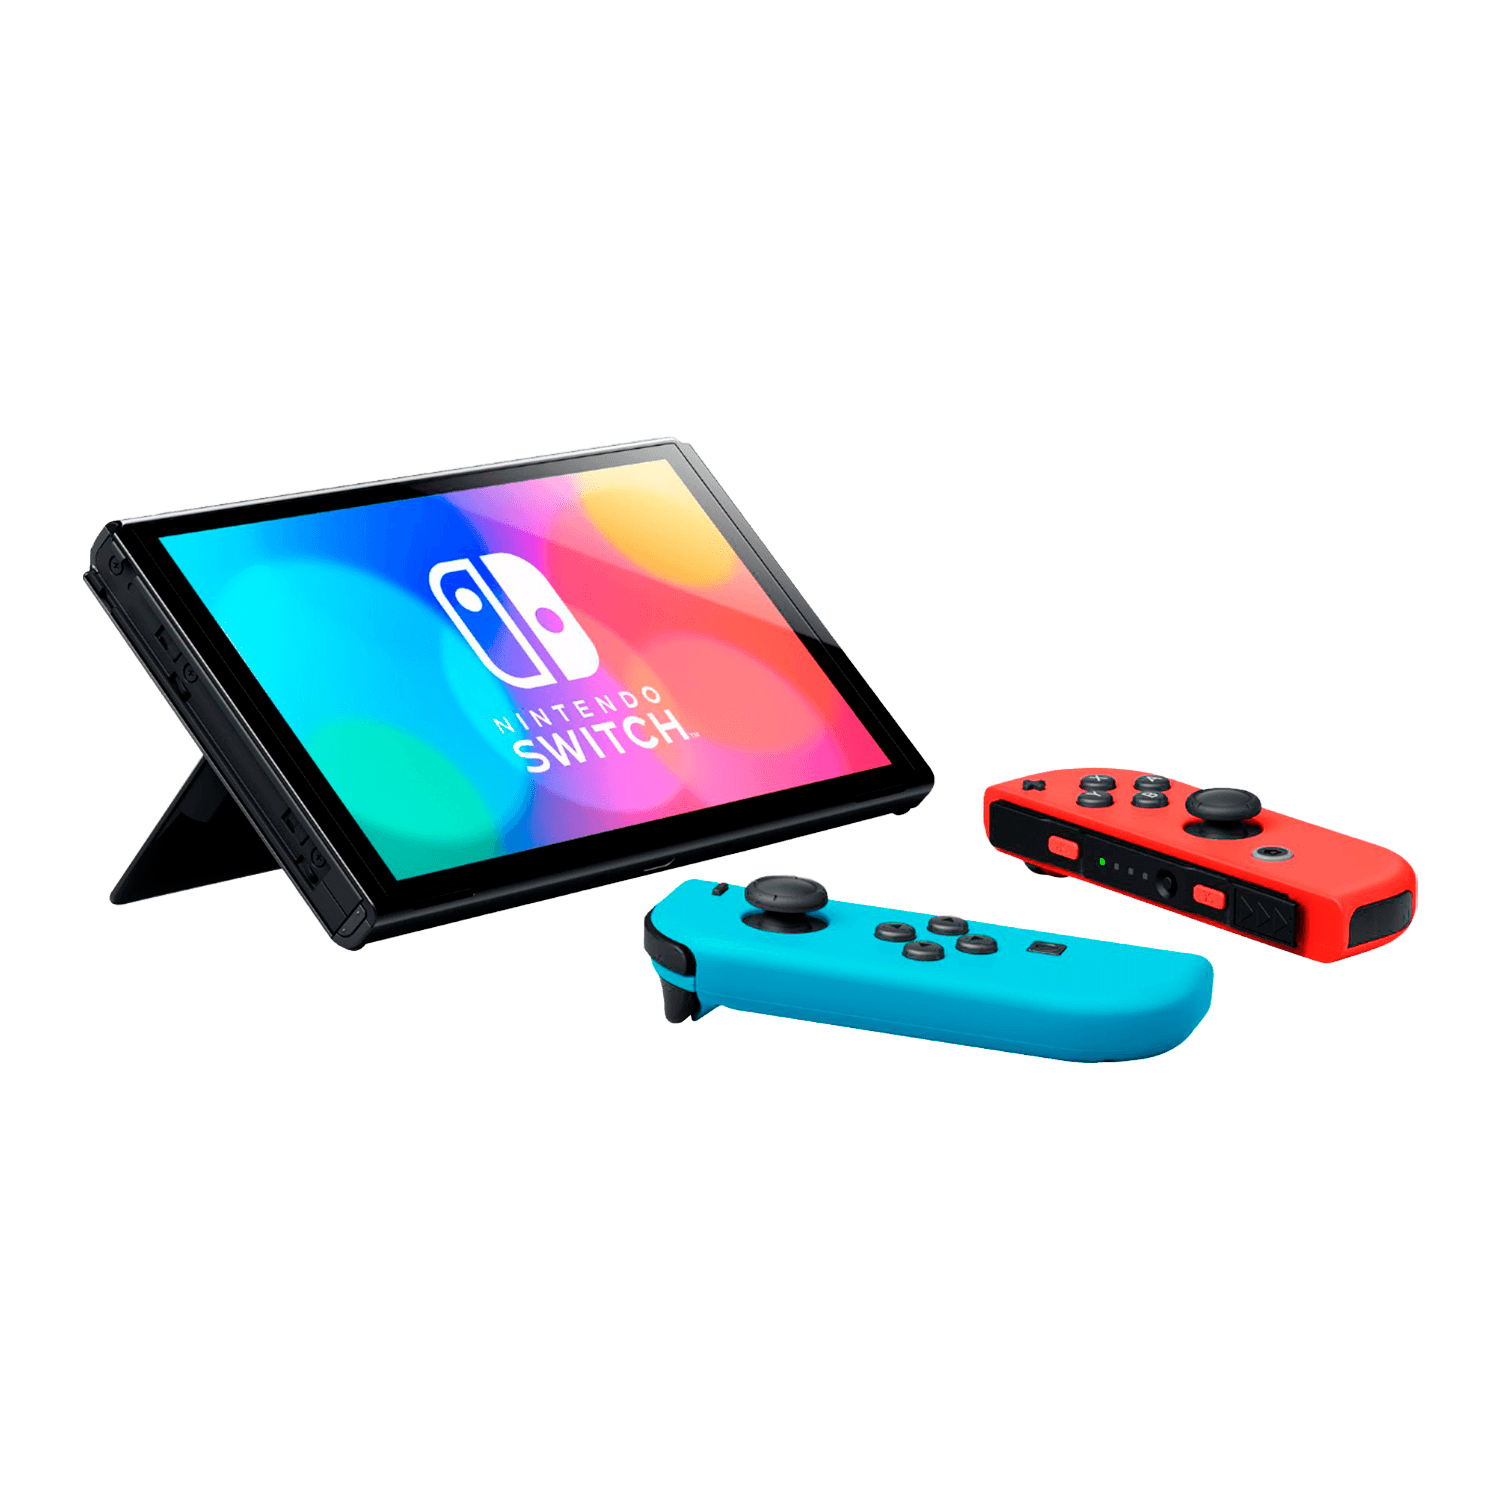 Console Nintendo Switch OLED 64GB Japão - Neon (HAD-S-KGALG) (Caixa Danificada)